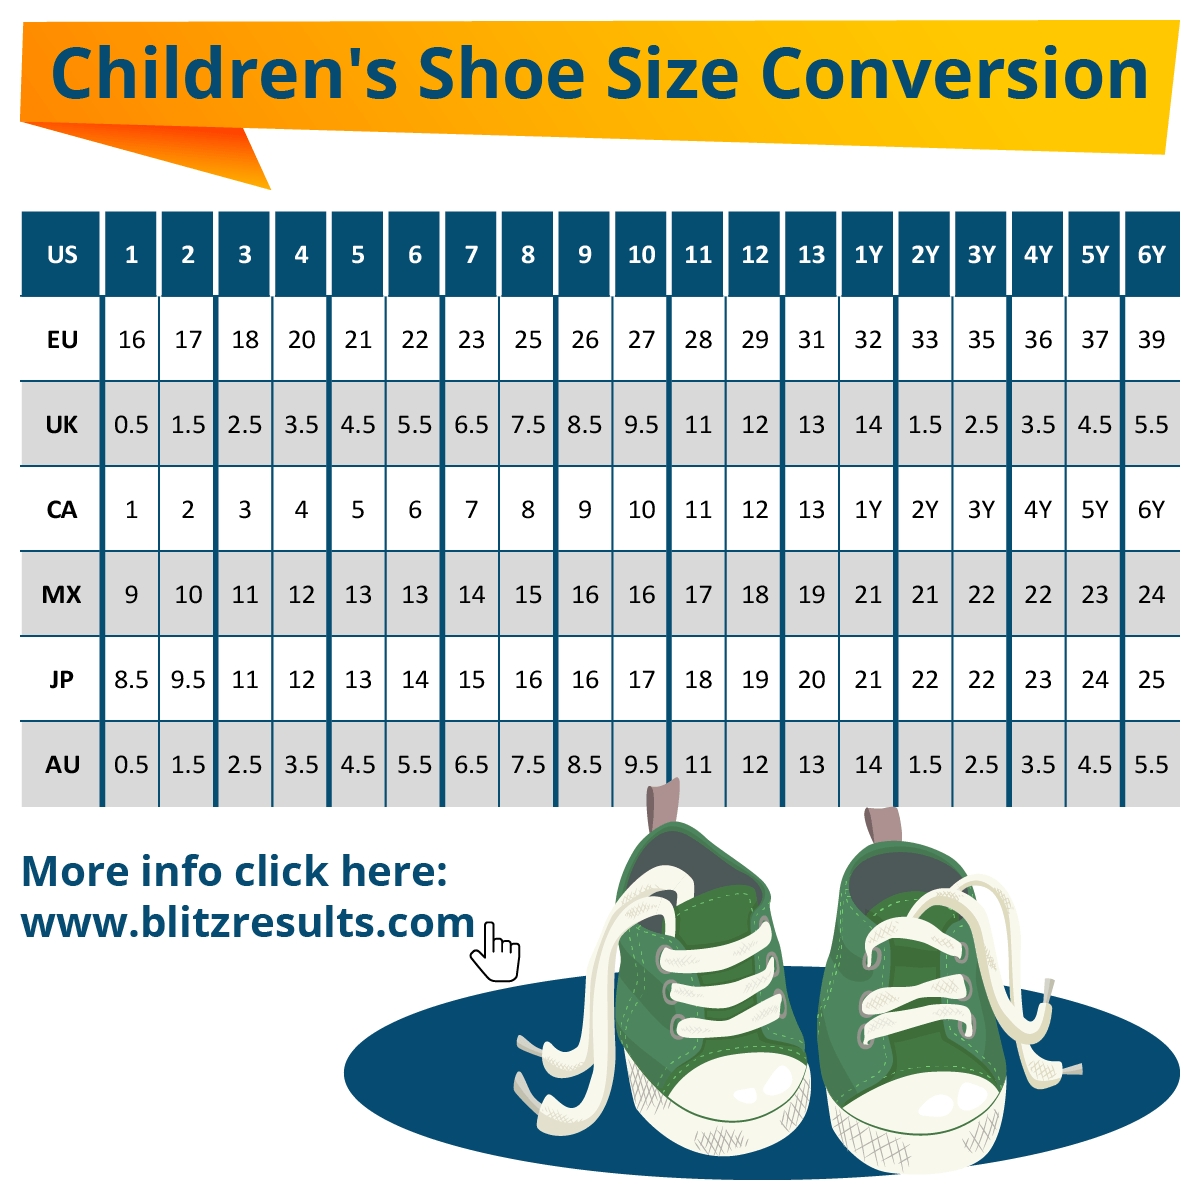 ᐅ Kids Shoe Size Conversion UK To US EU To US International   